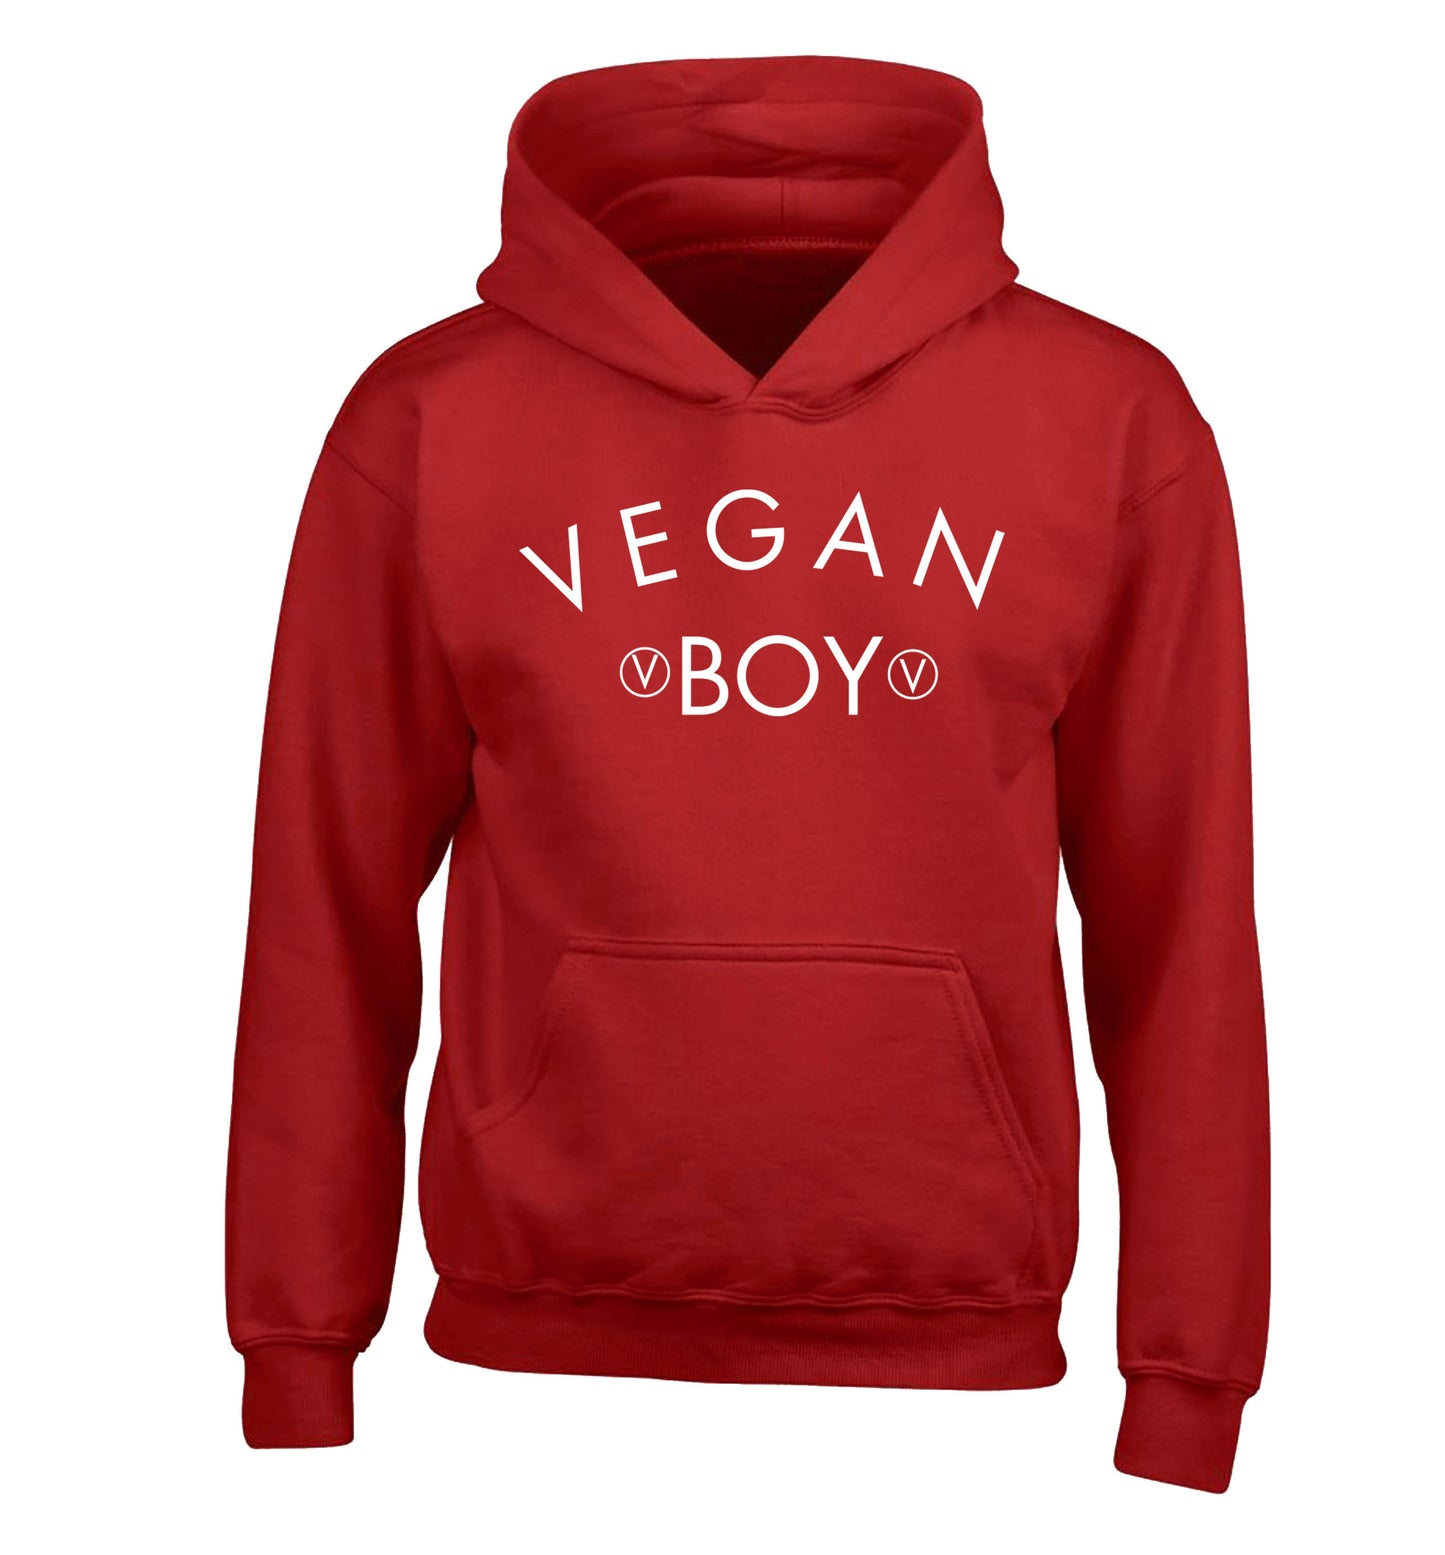 Vegan boy children's red hoodie 12-14 Years